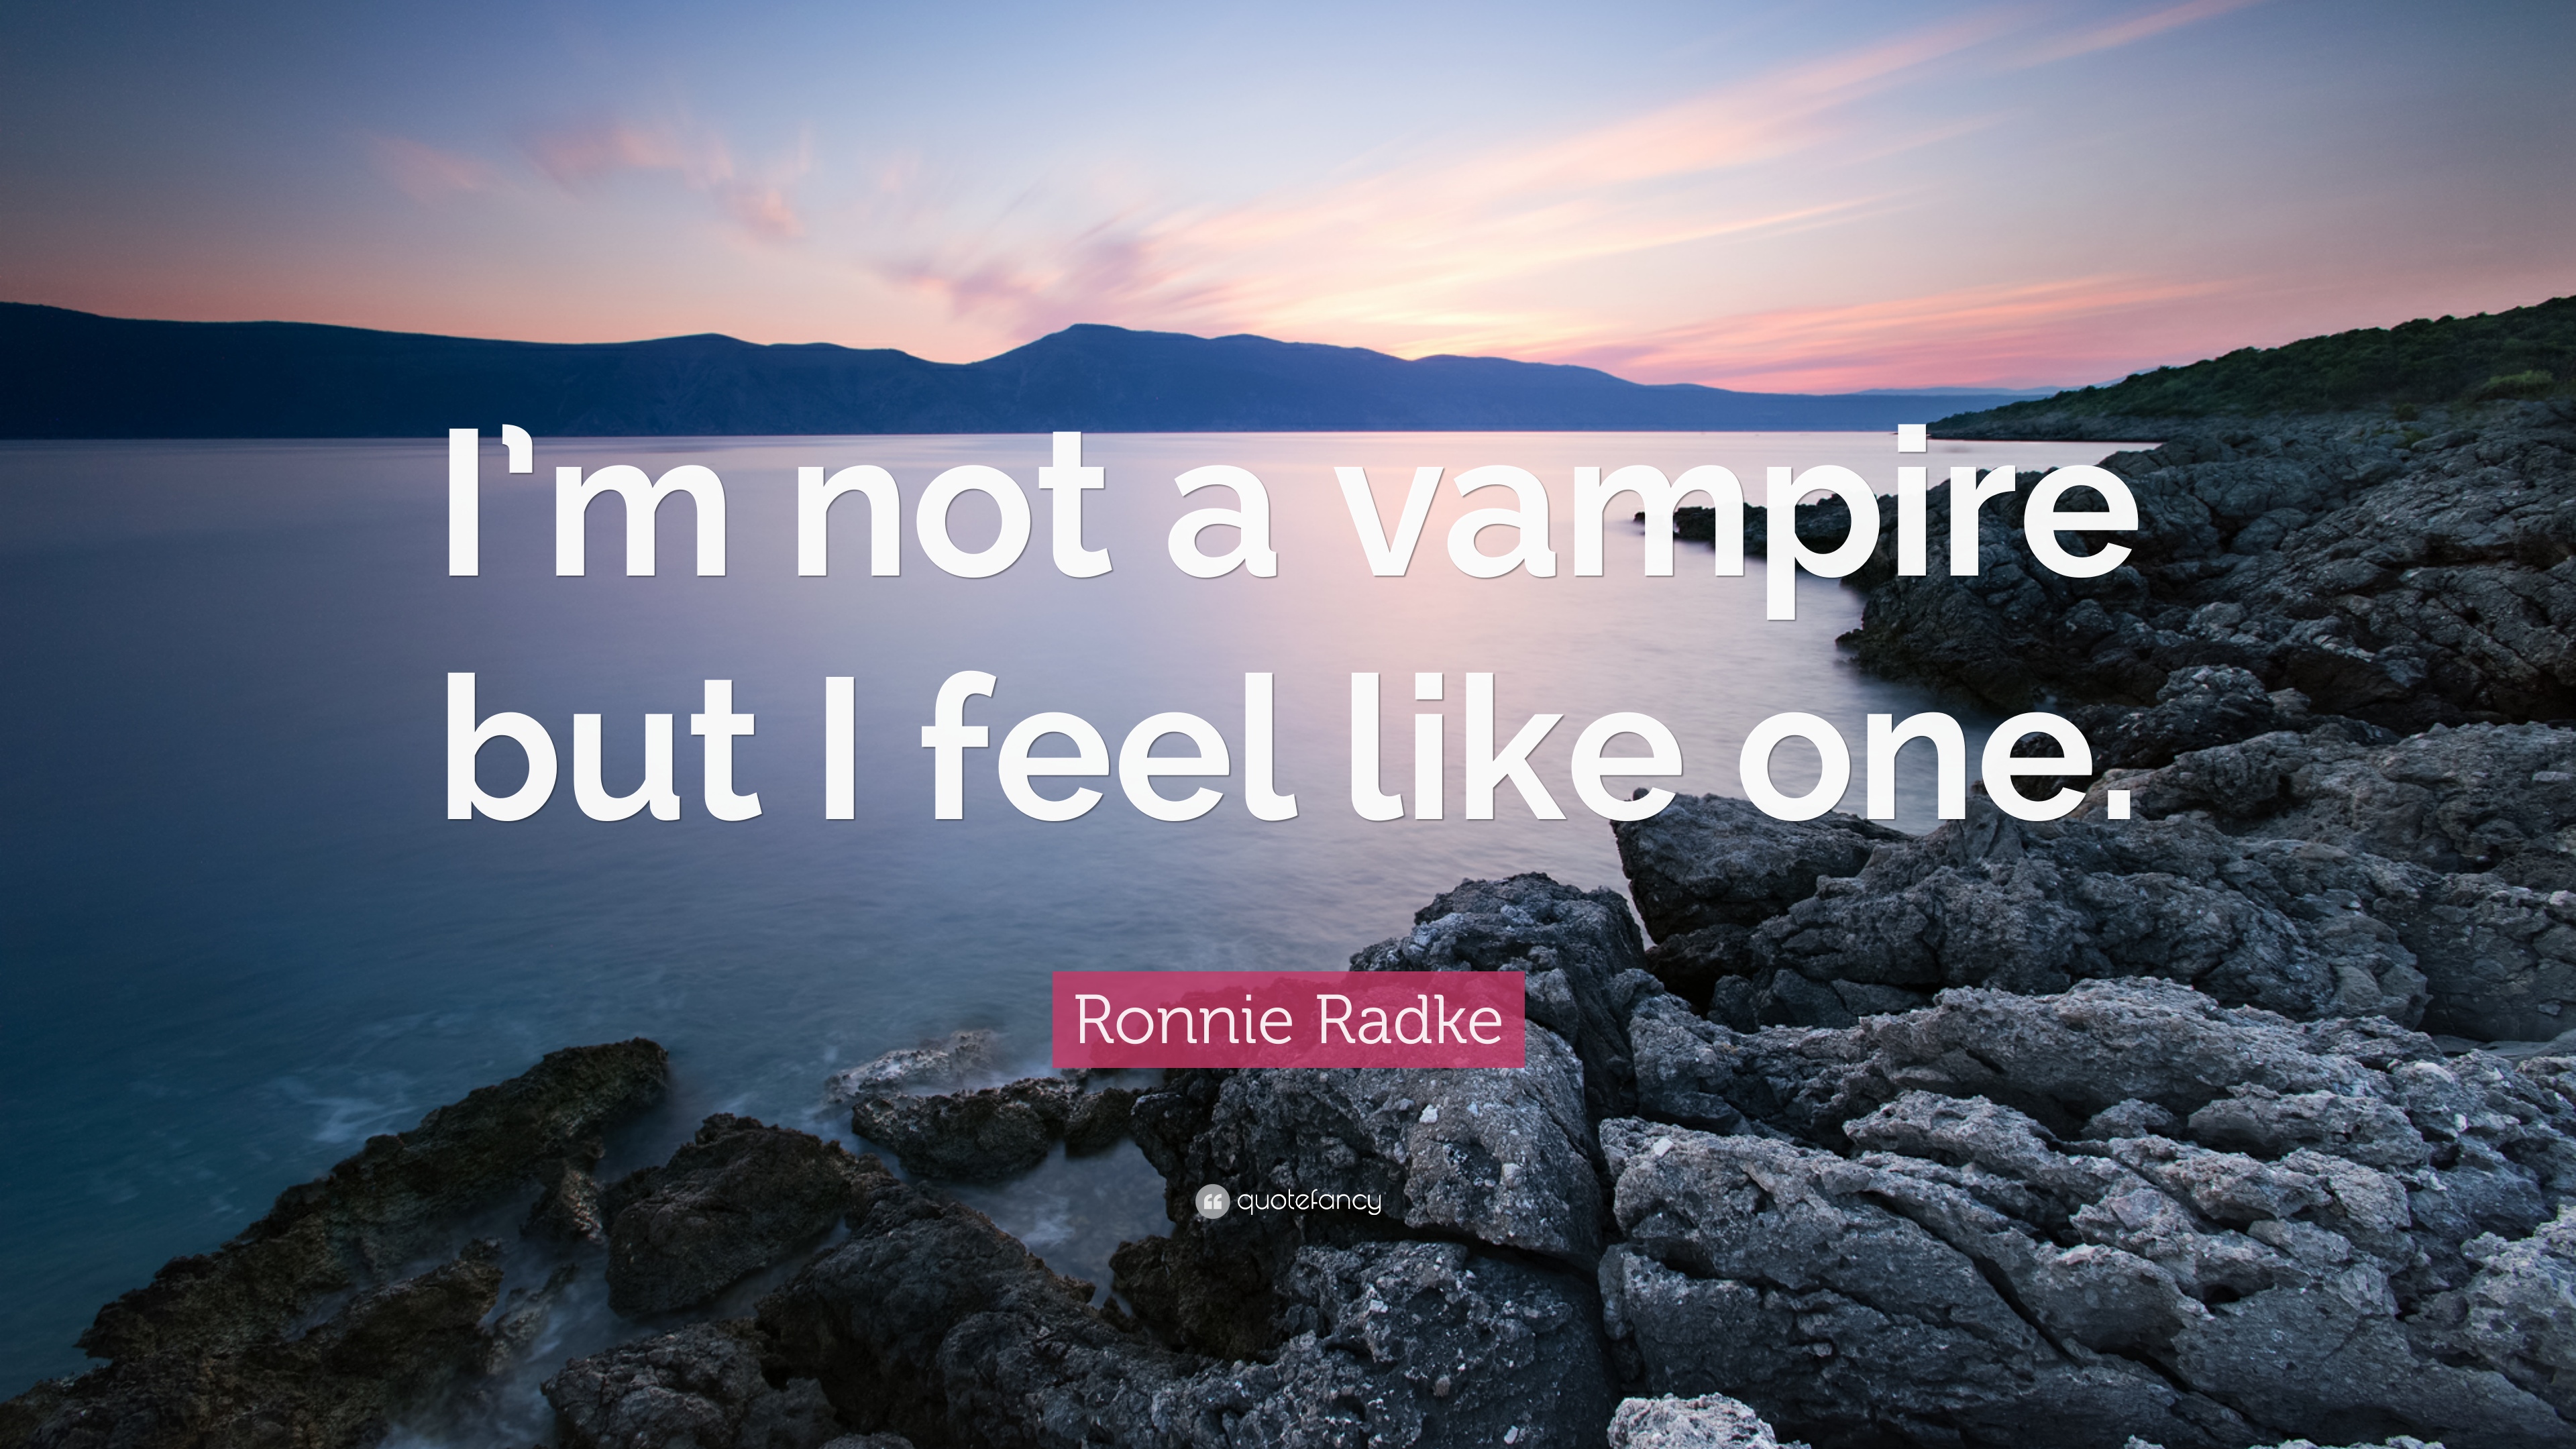 Ronnie Radke Quote: “I'm not a vampire but I feel like one.” 7